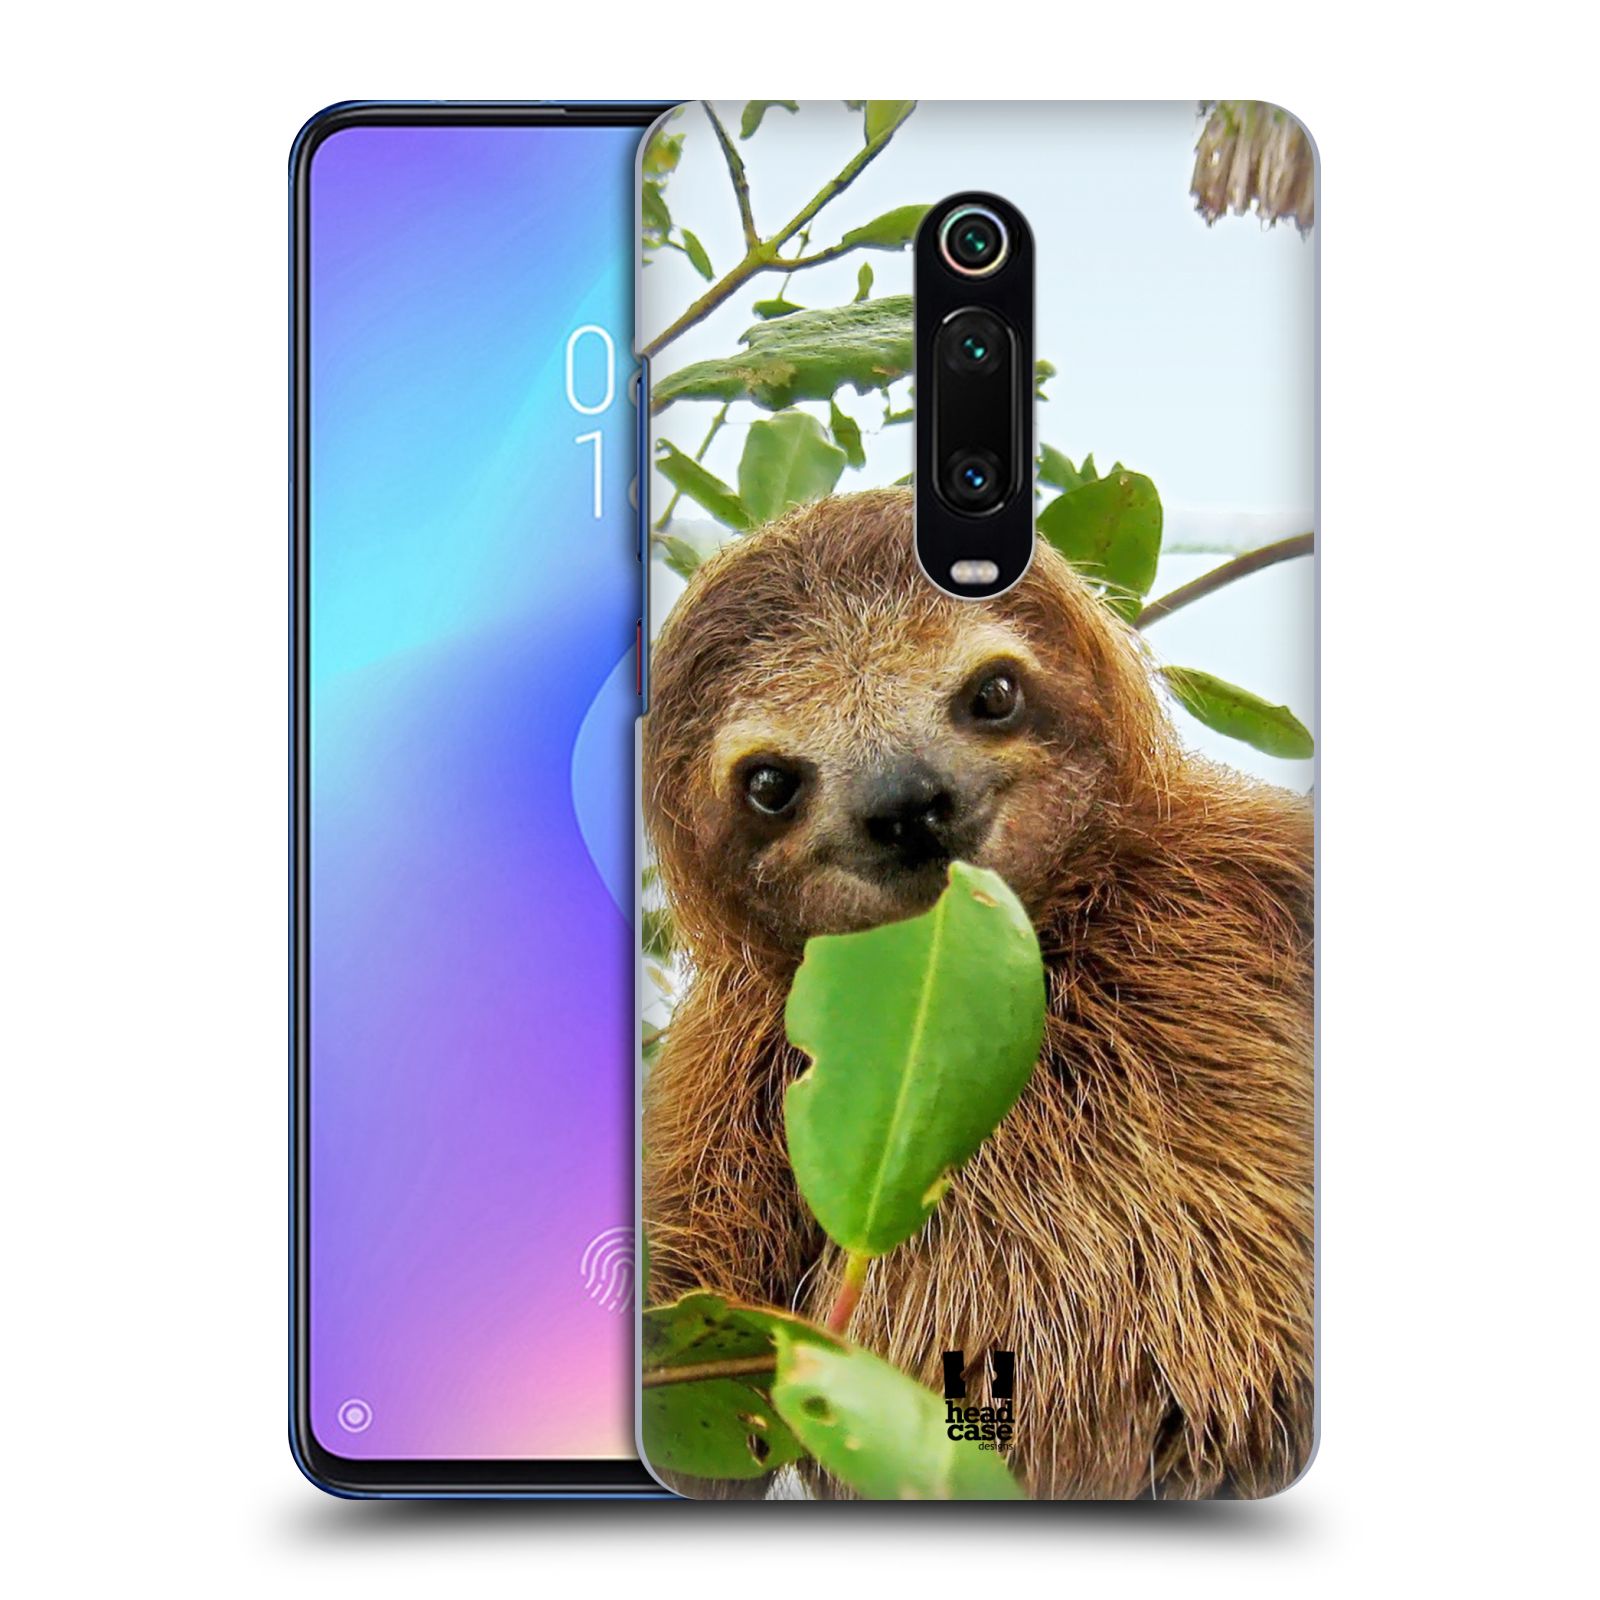 Pouzdro na mobil Xiaomi Mi 9T PRO - HEAD CASE - vzor slavná zvířata foto lenochod